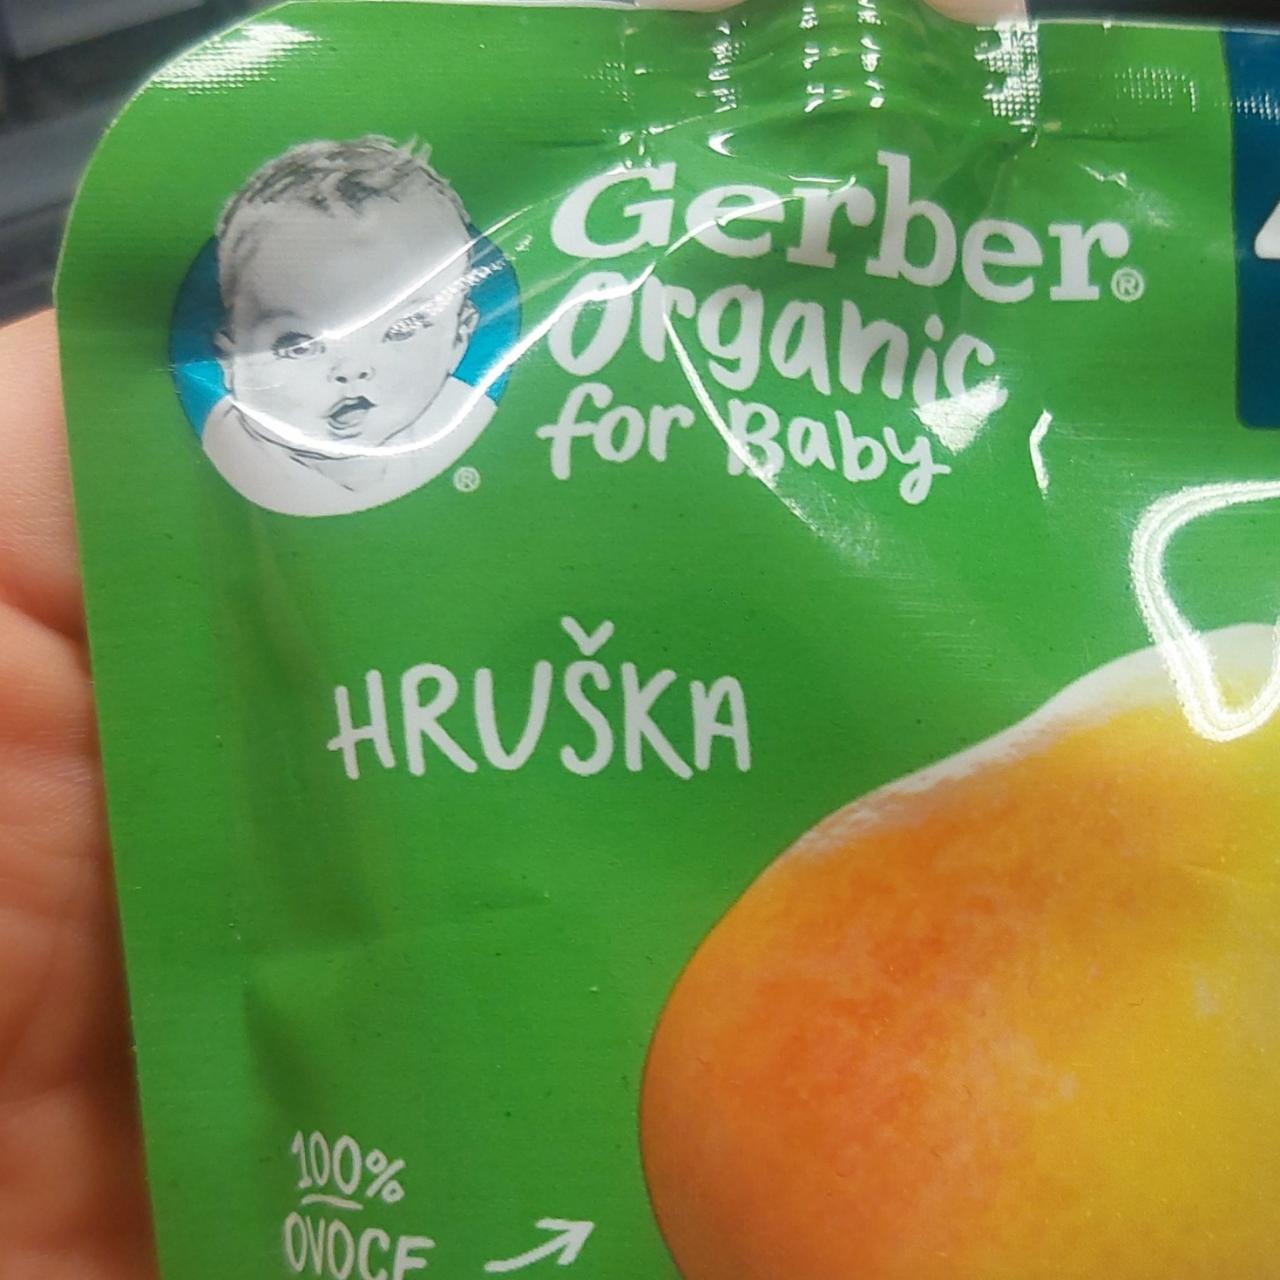 Fotografie - Hruška Gerber organic for baby